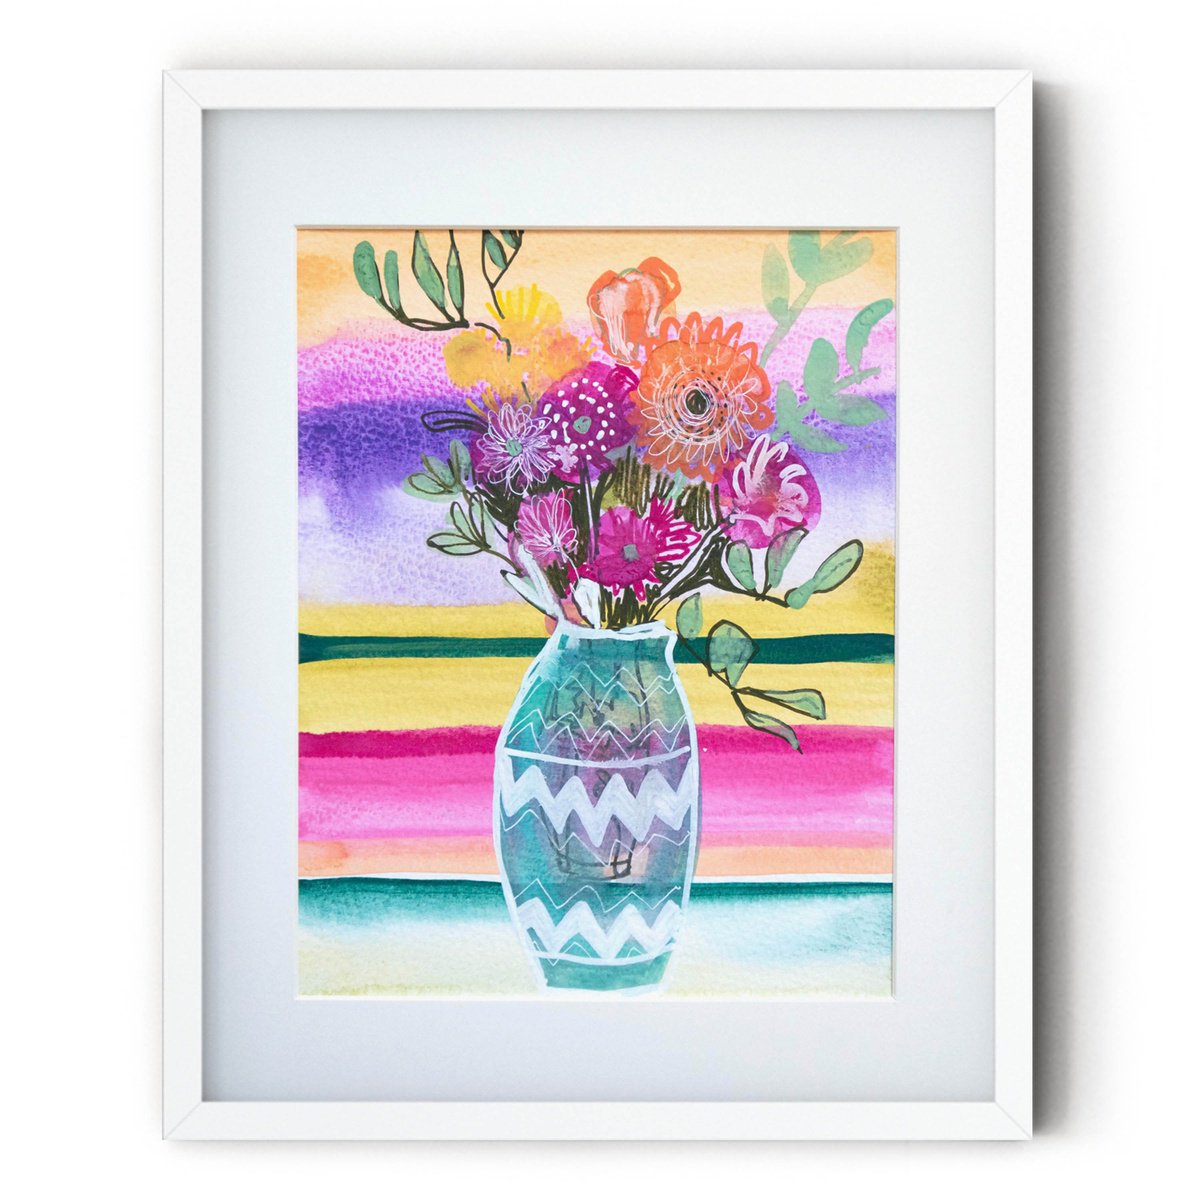 Joyful Vase of Flowers by Suzie Cumming